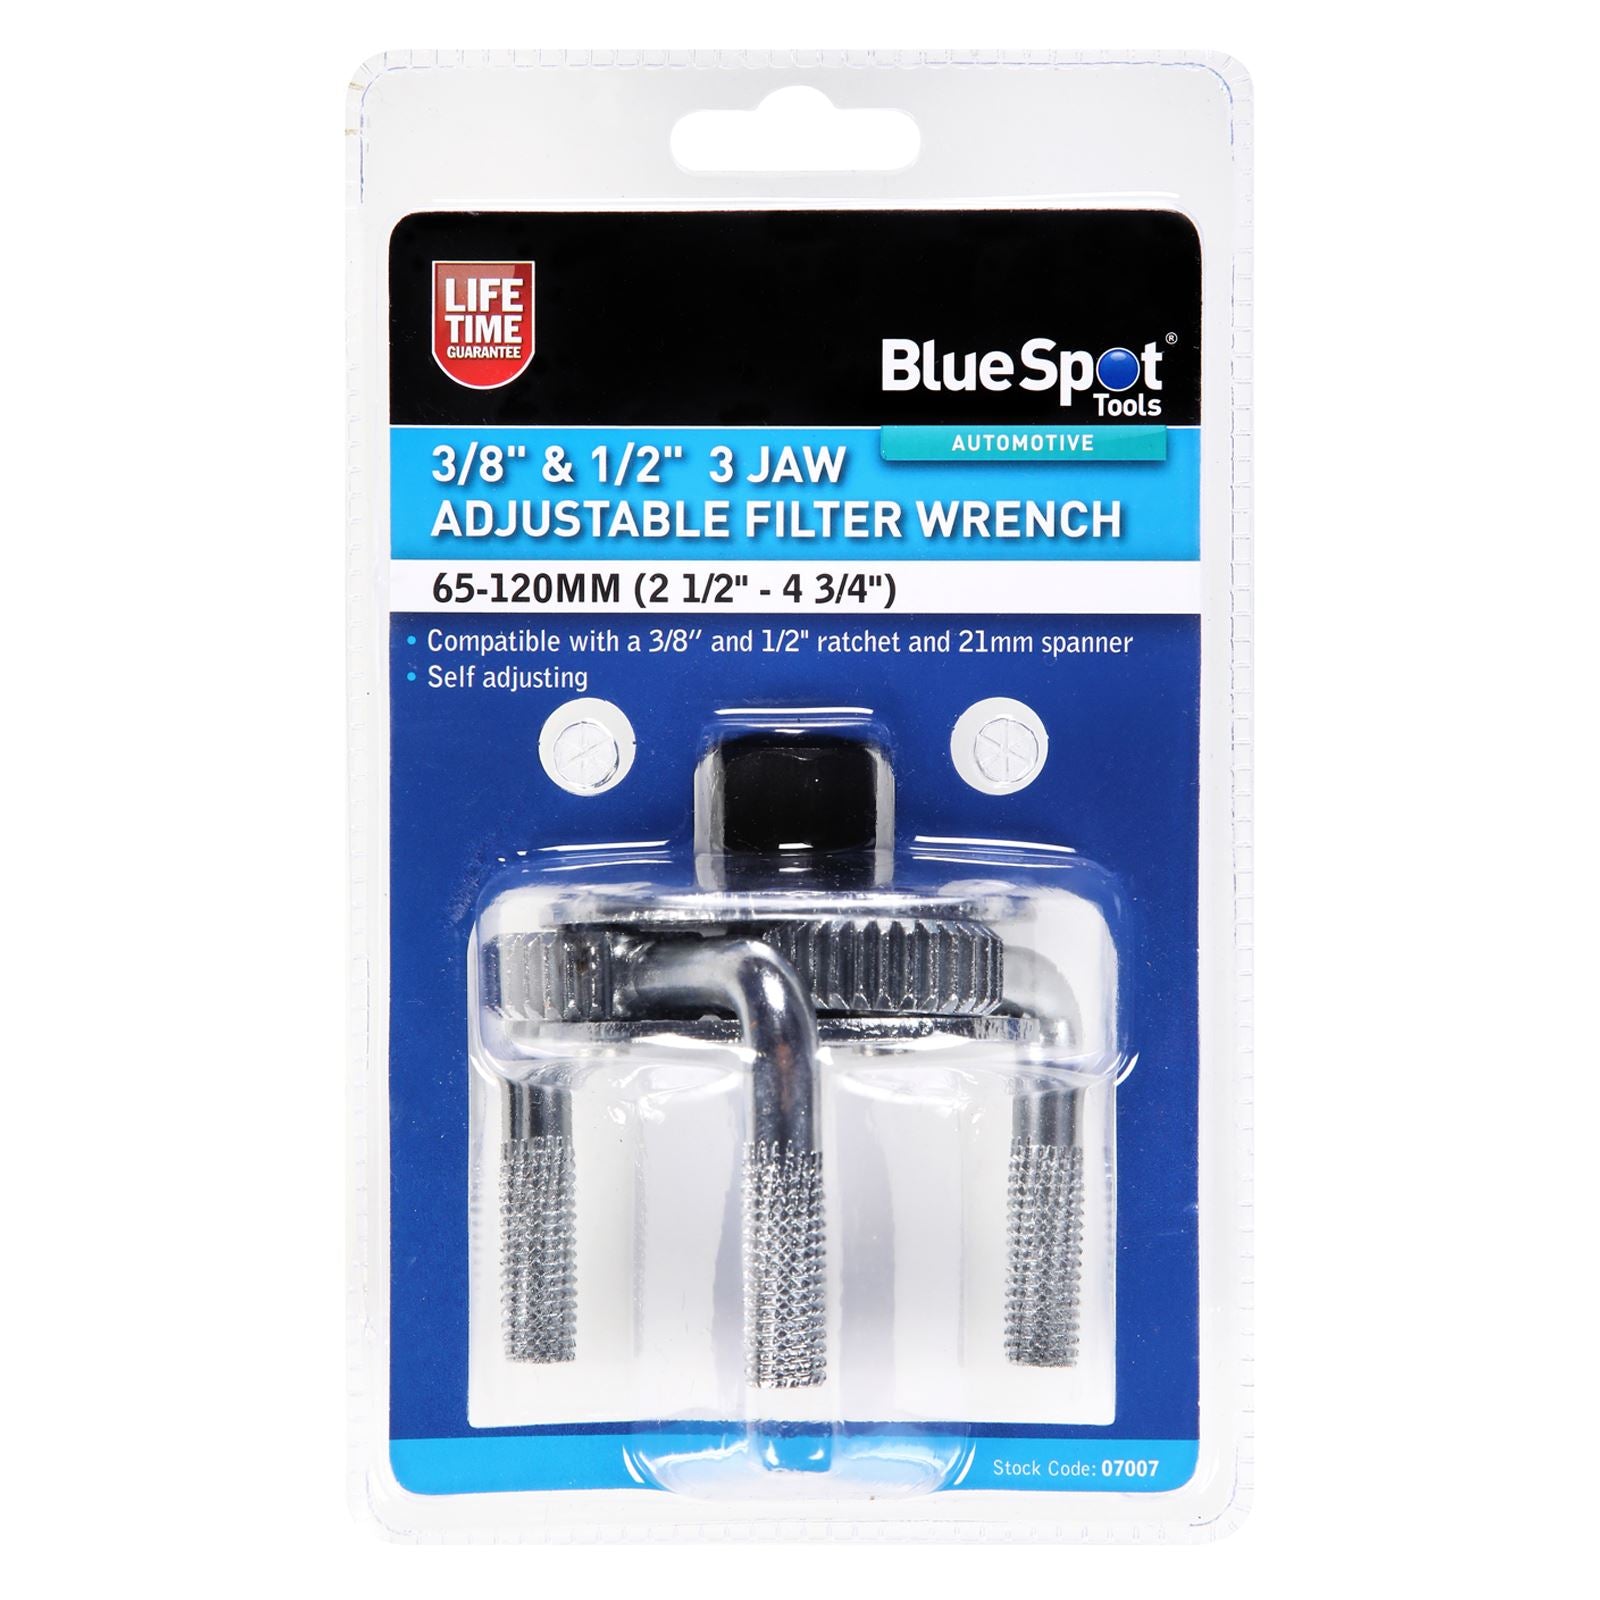 BlueSpot Adjustable Filter Wrench 3 Jaw Adjustable 3/8" 1/2" 65-120mm